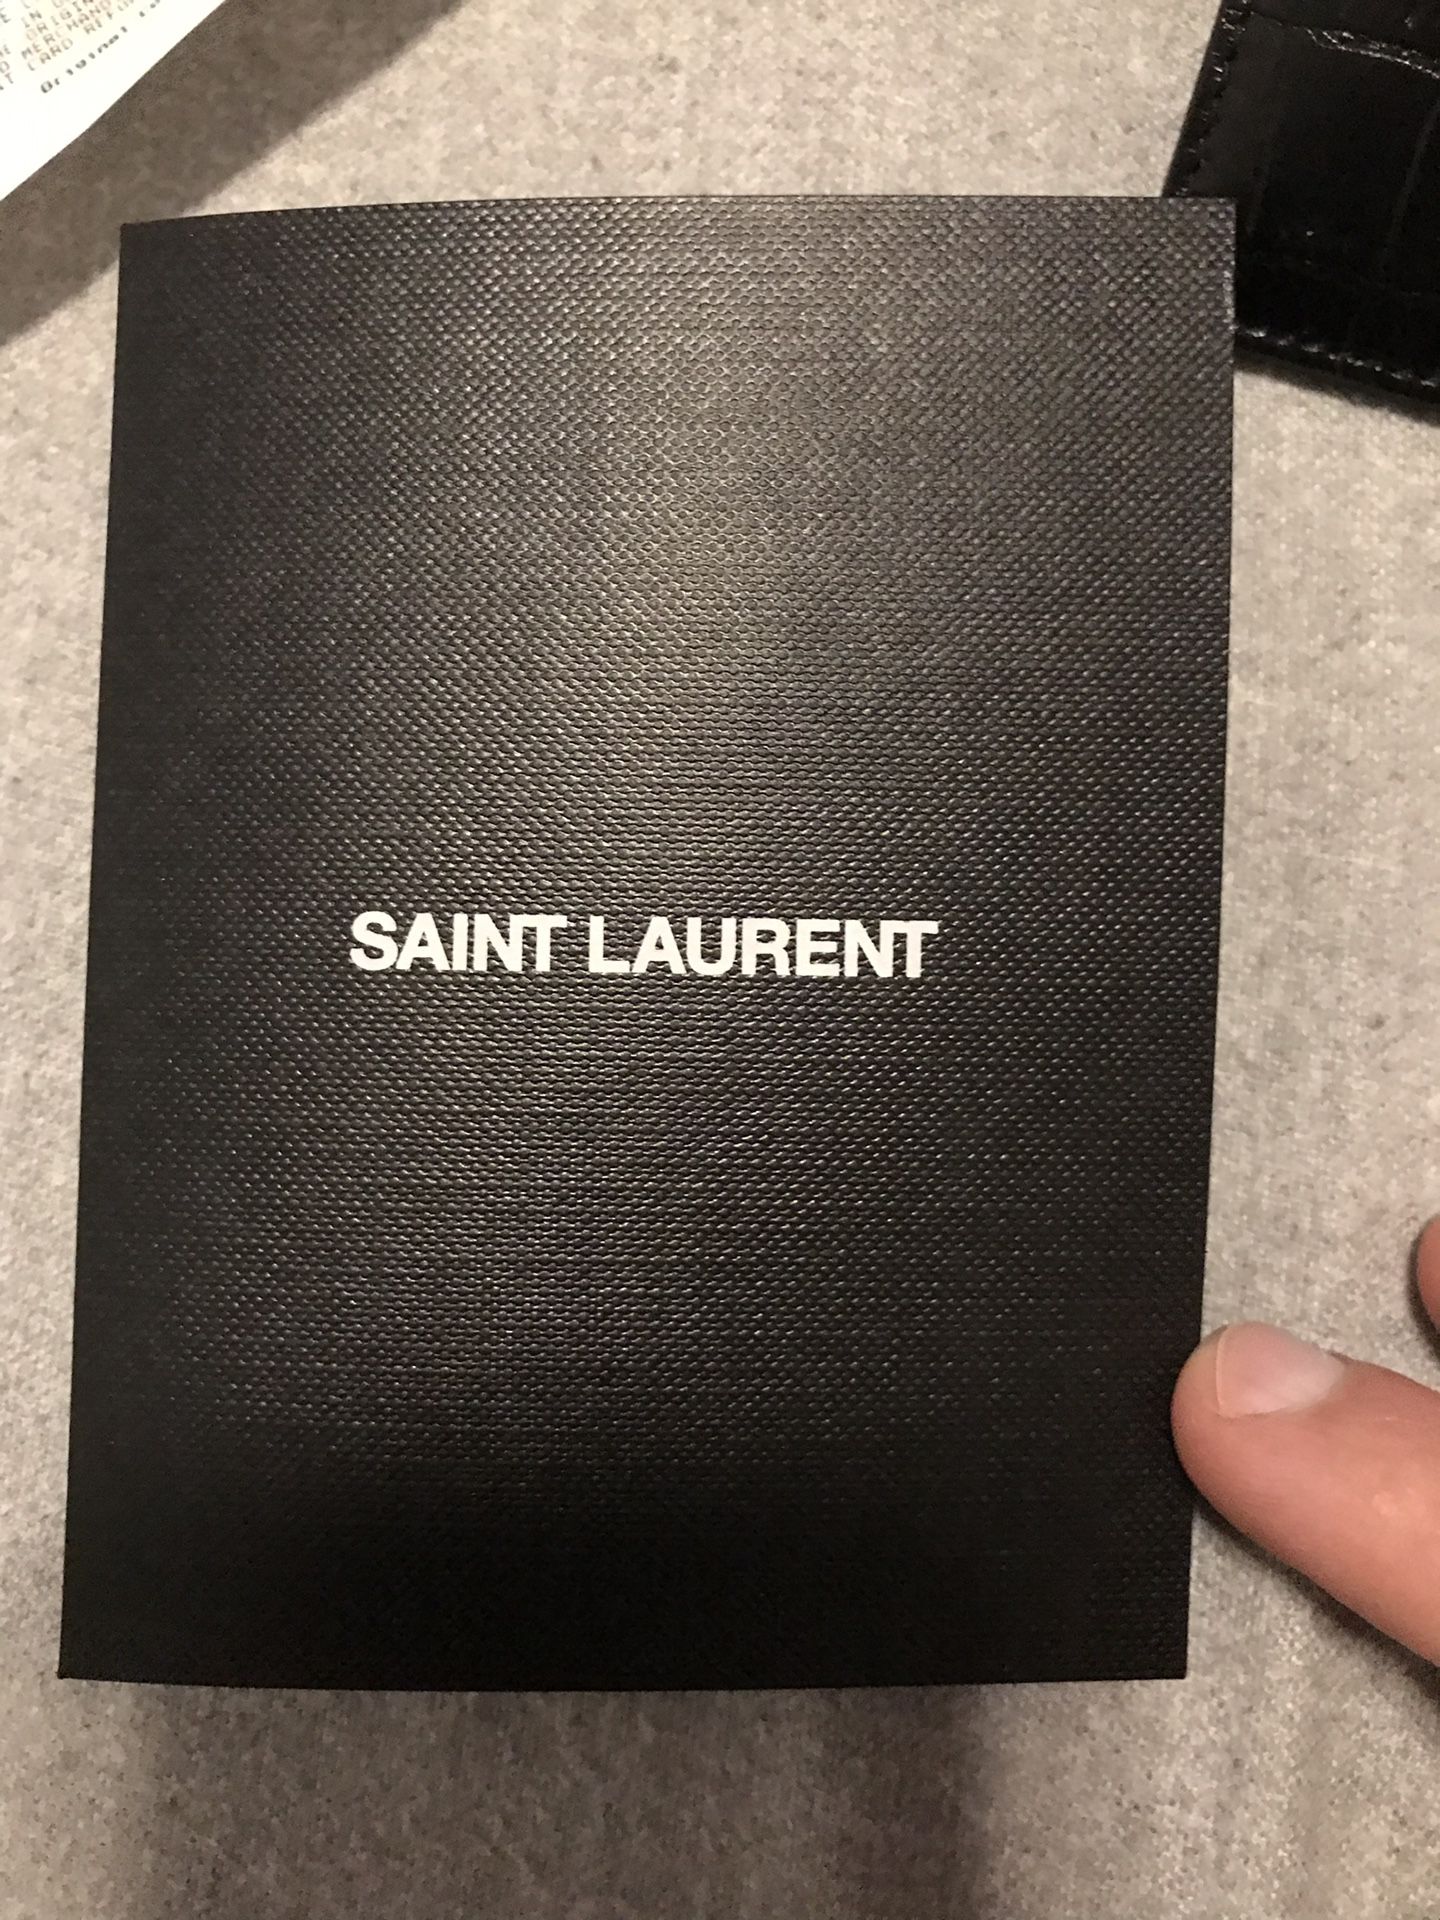 Saint Laurent Money Clip for Sale in Fairfield, CA - OfferUp